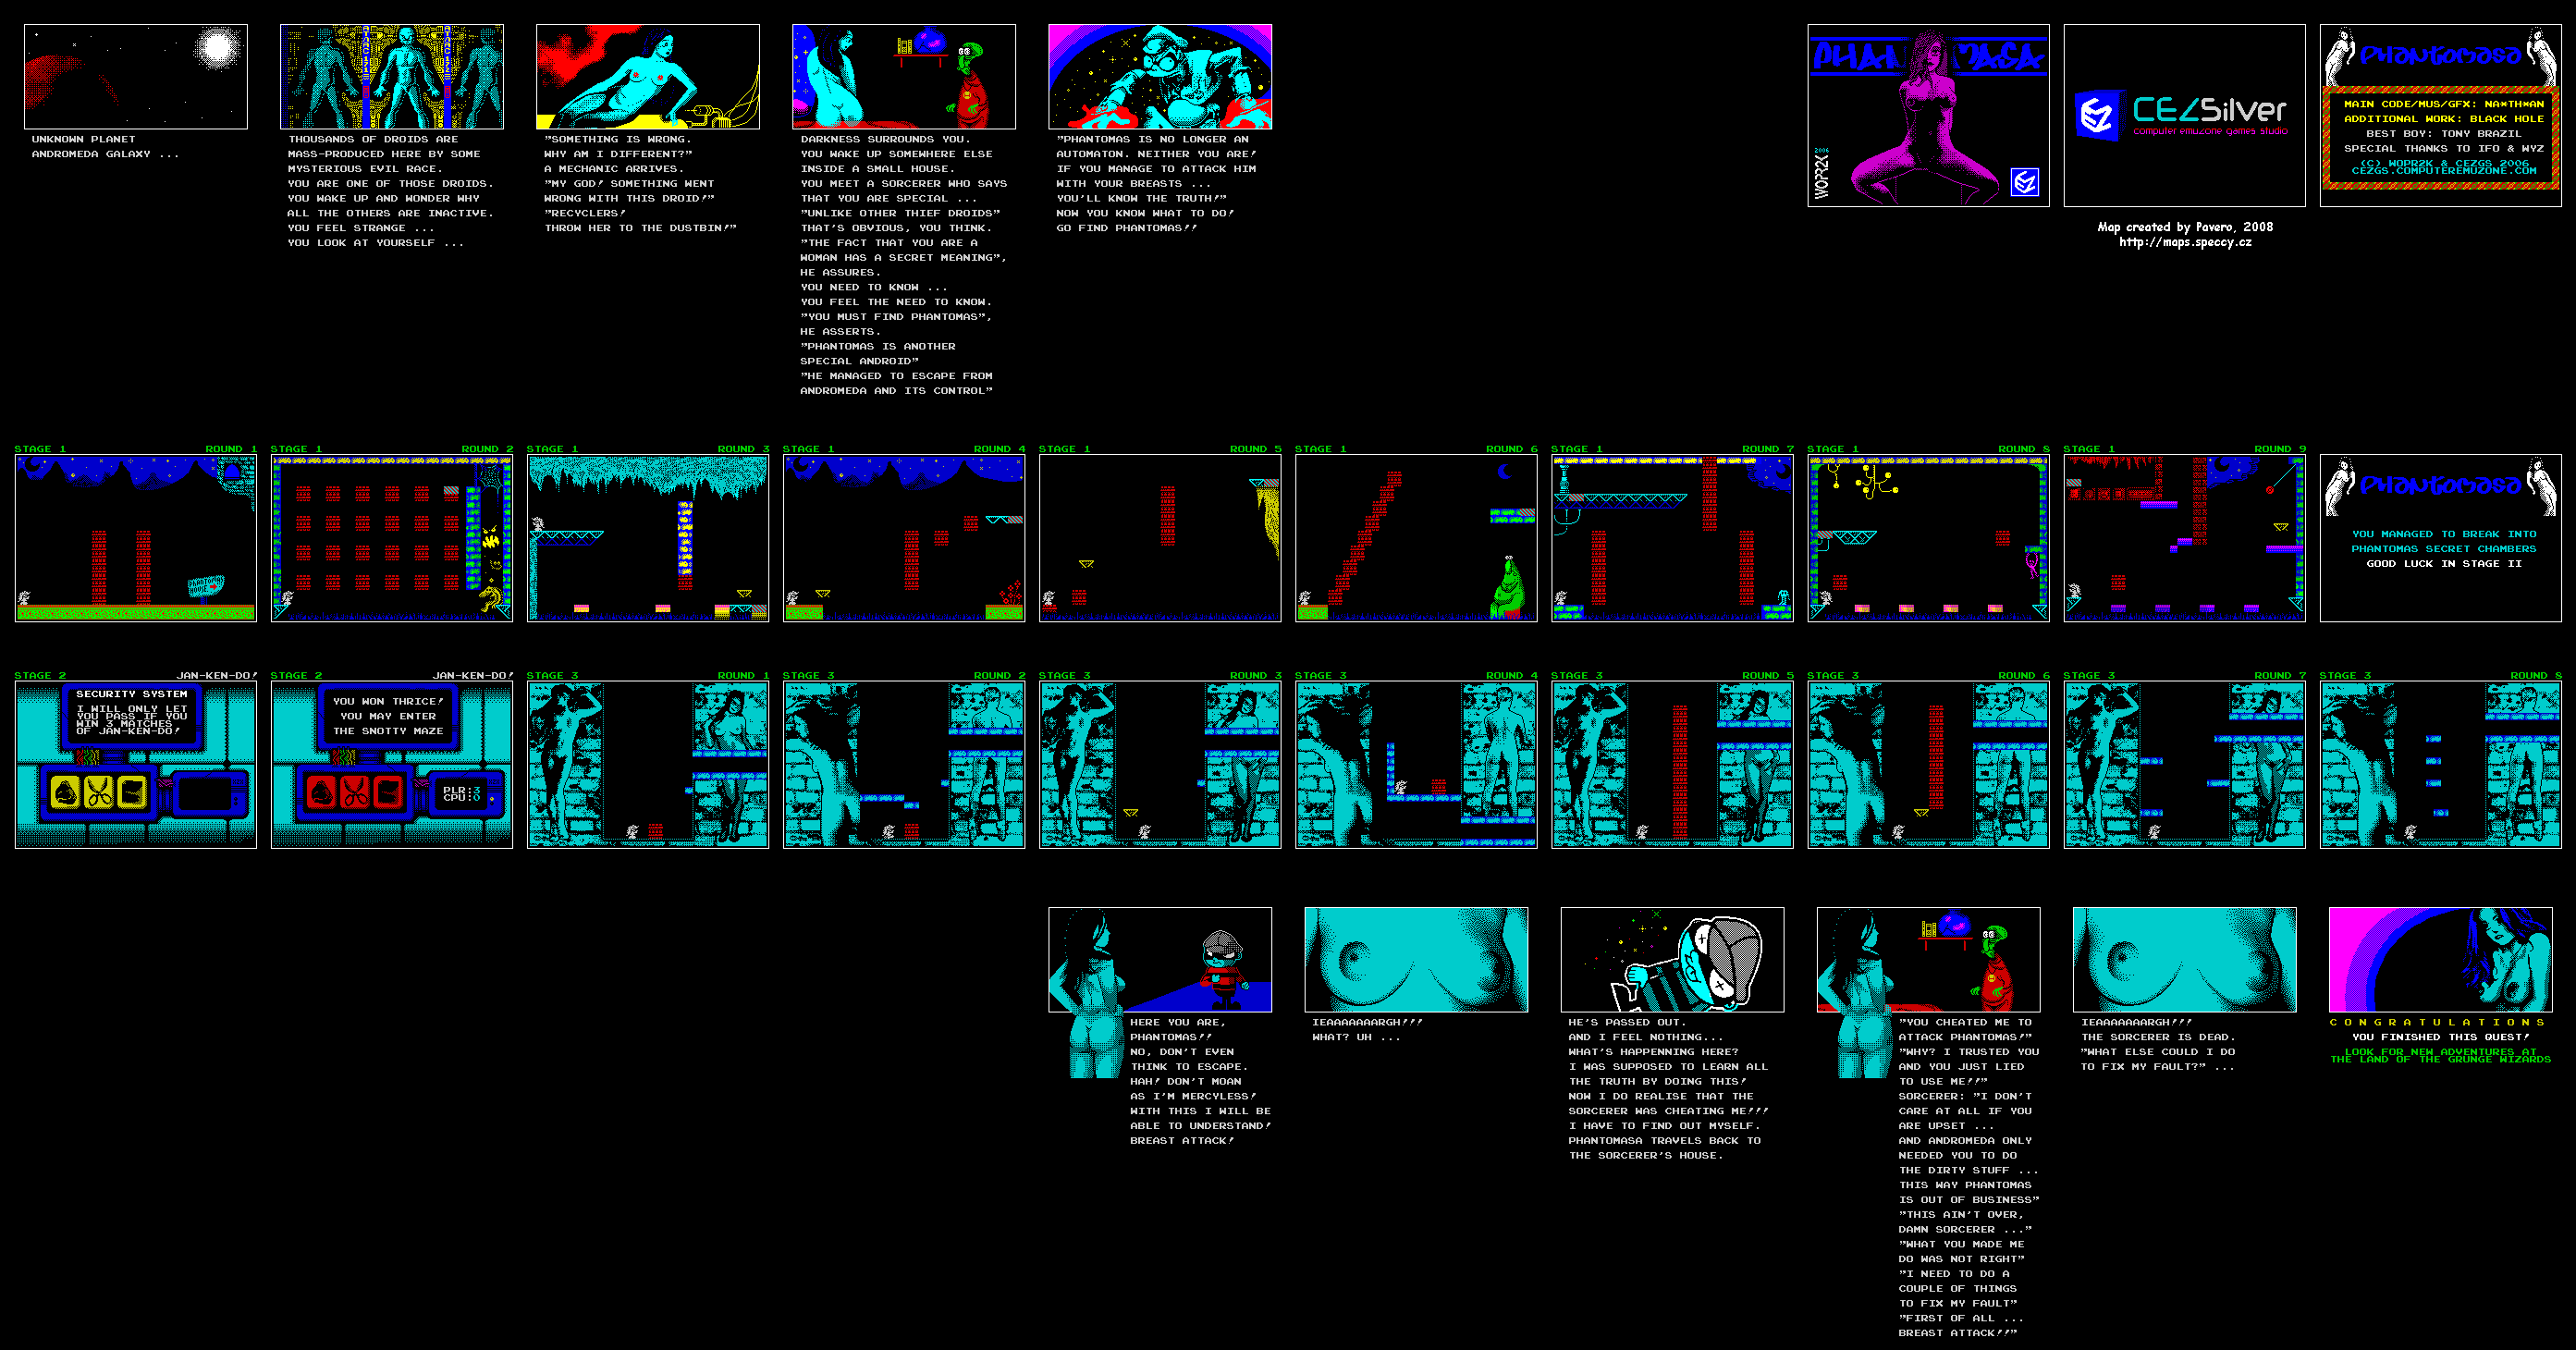 Phantomasa 1 - The Map